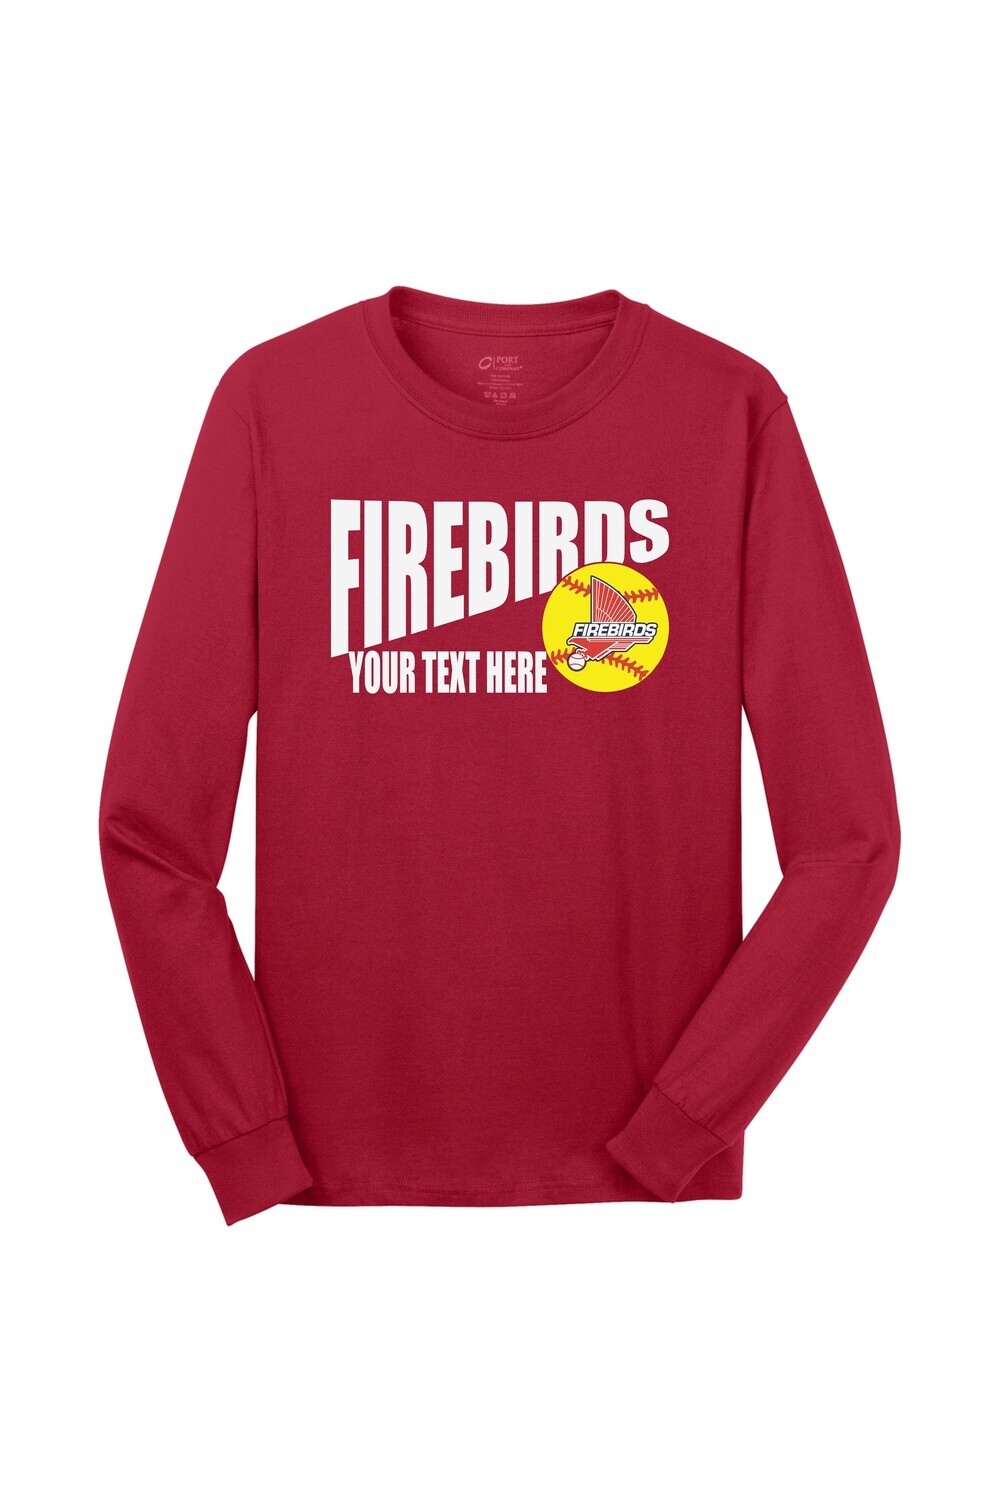 Firebirds Personalized Long Sleeve T-shirt